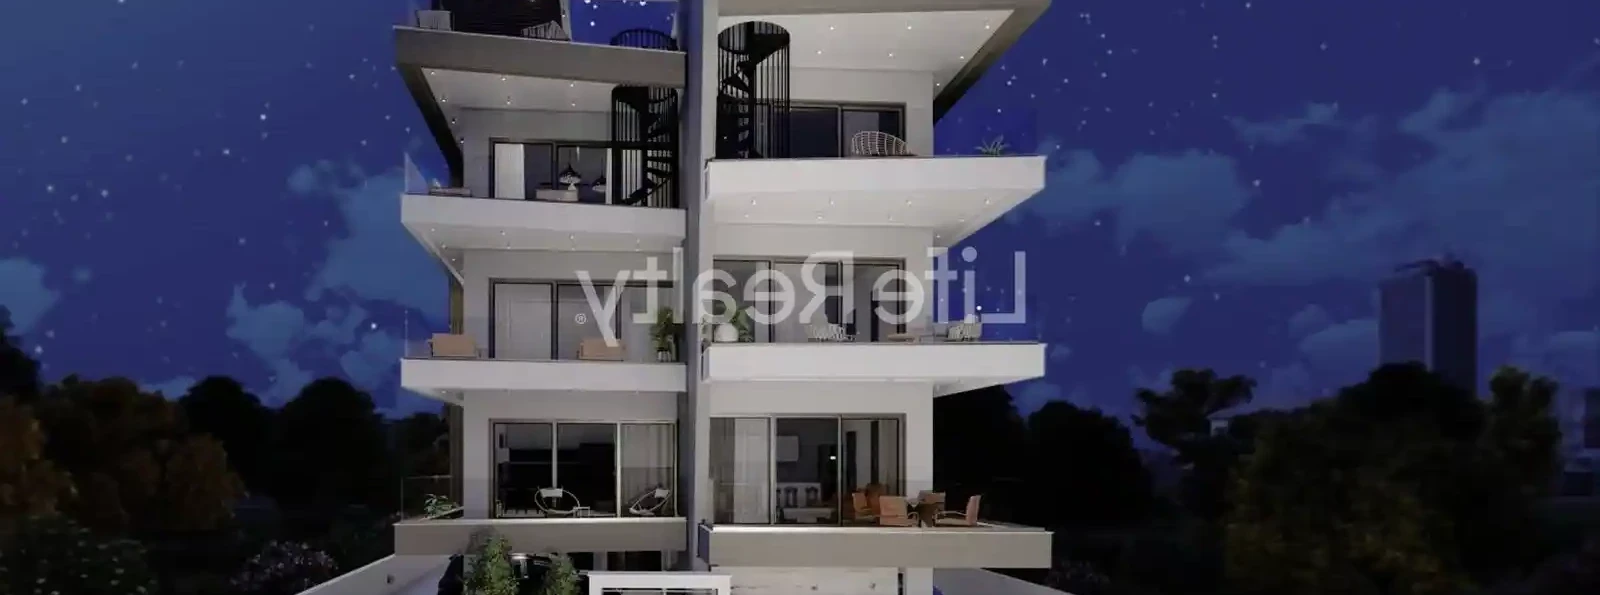 3-bedroom penthouse fоr sаle €575.000, image 1